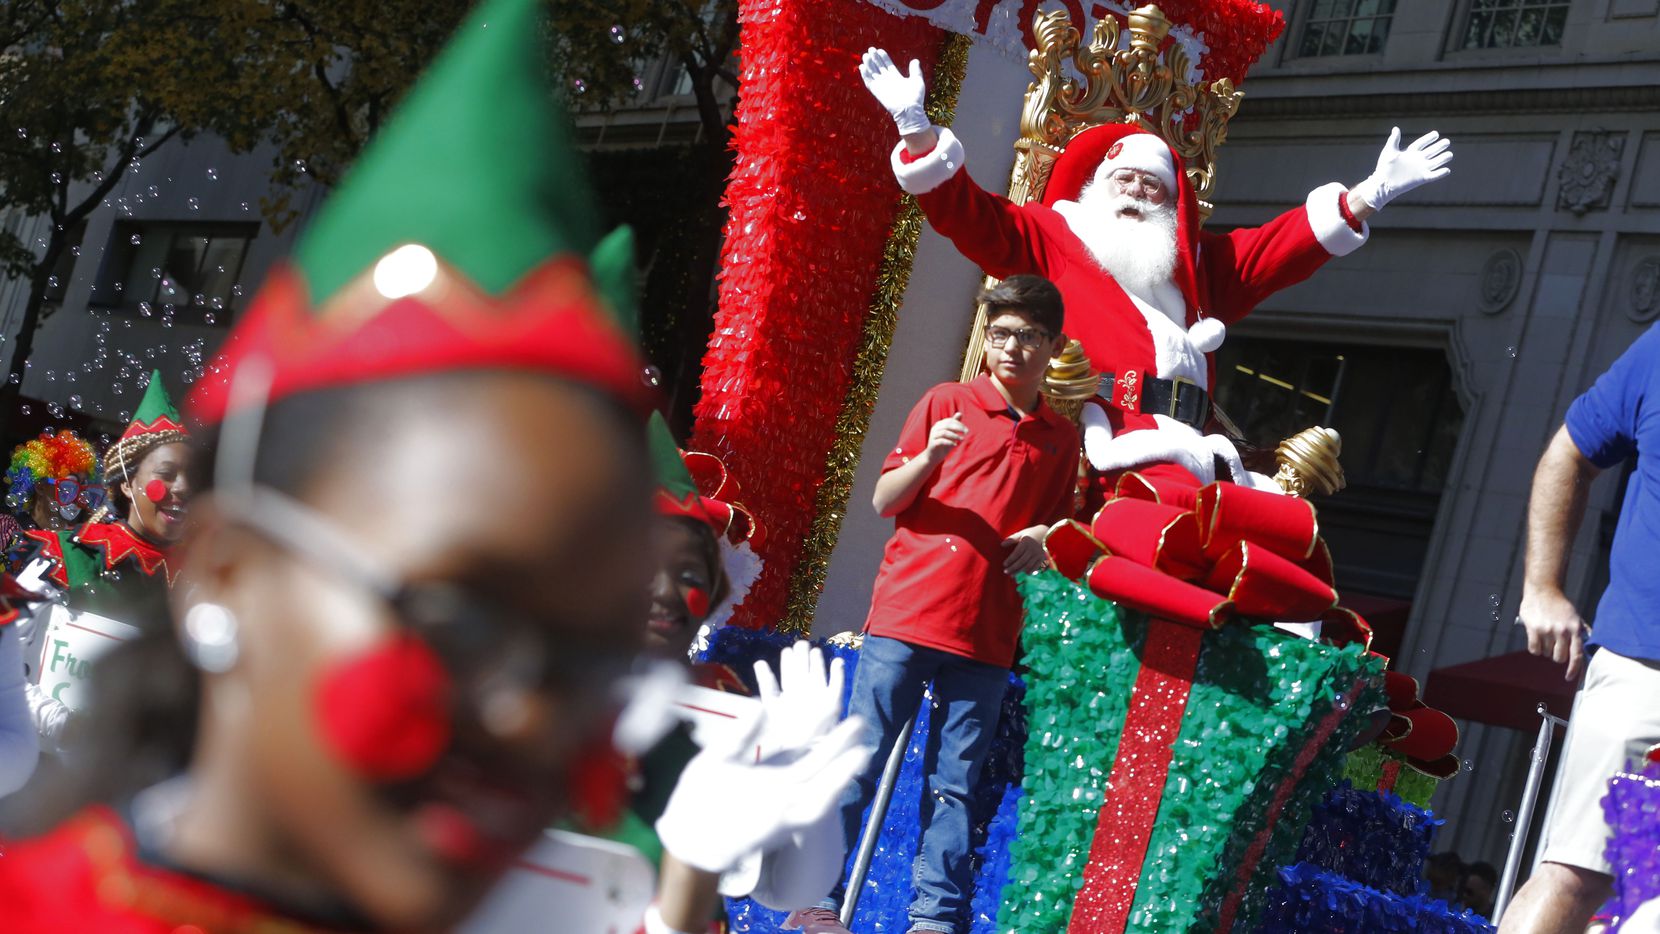 Santa Claus greets the people during the Dallas Holiday Parade on Dec. 1, 2018. (Nathan Hunsinger/The Dallas Morning News)